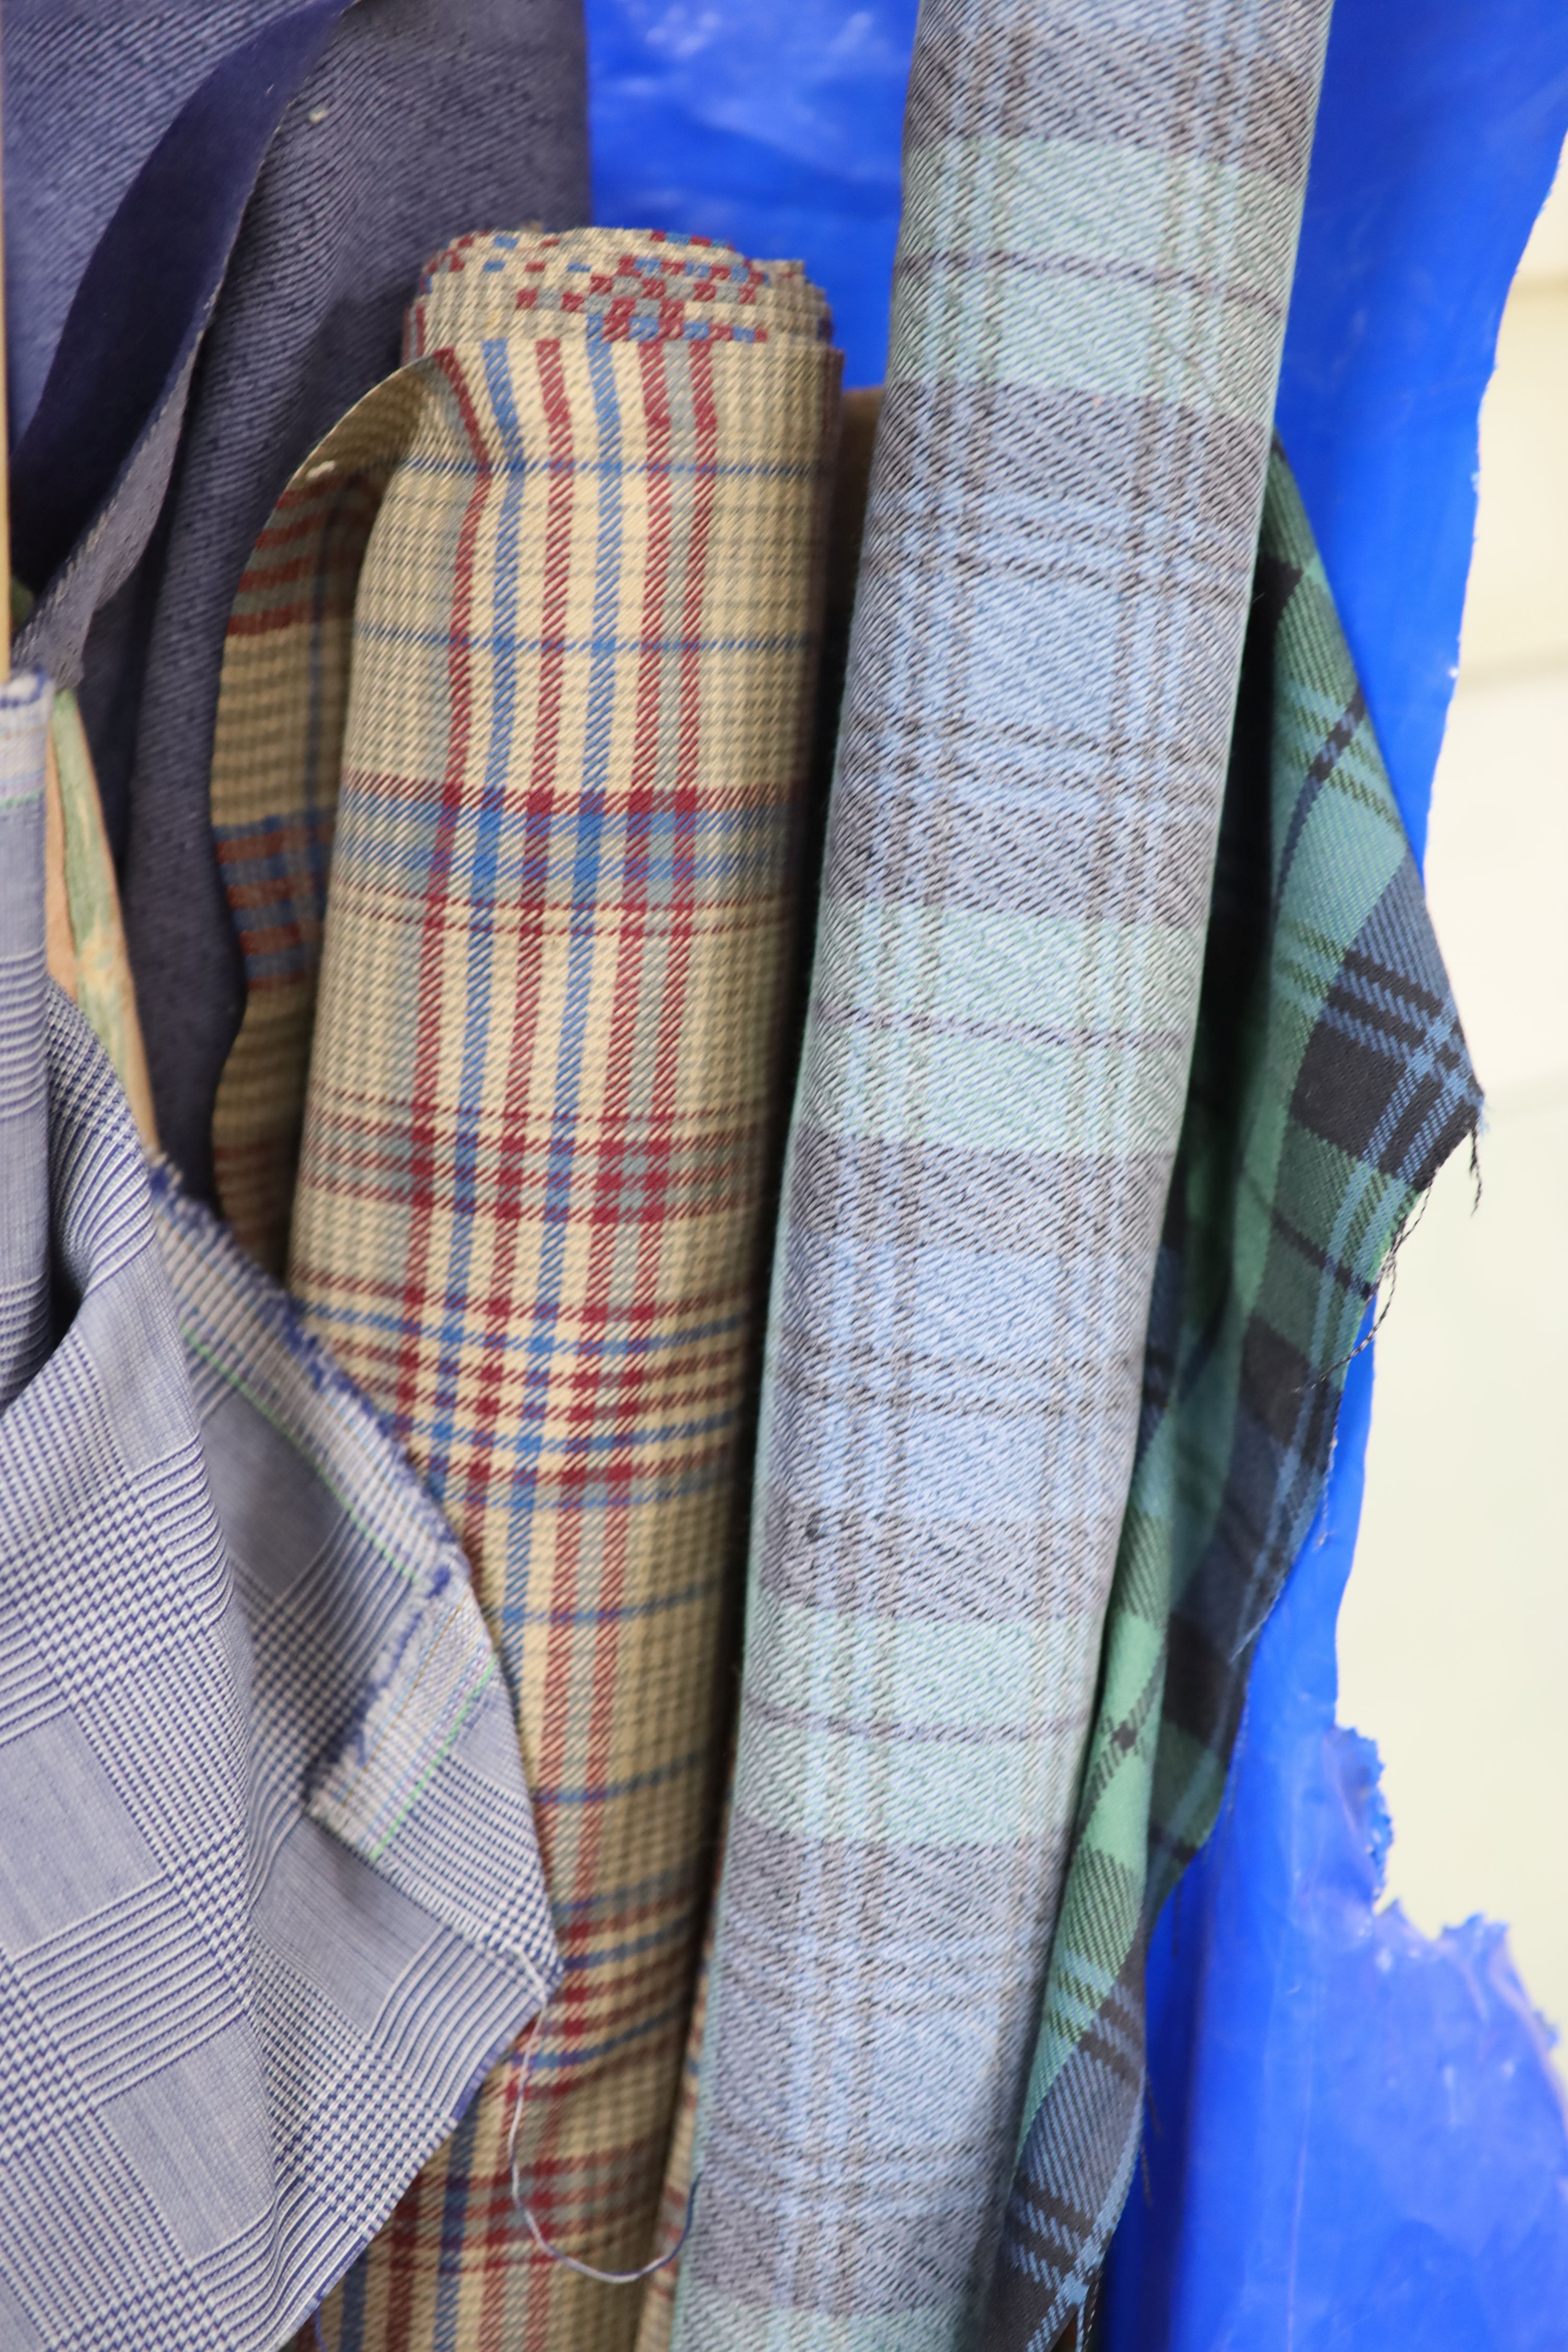 Various lengths of dress fabric including Scottish tartan